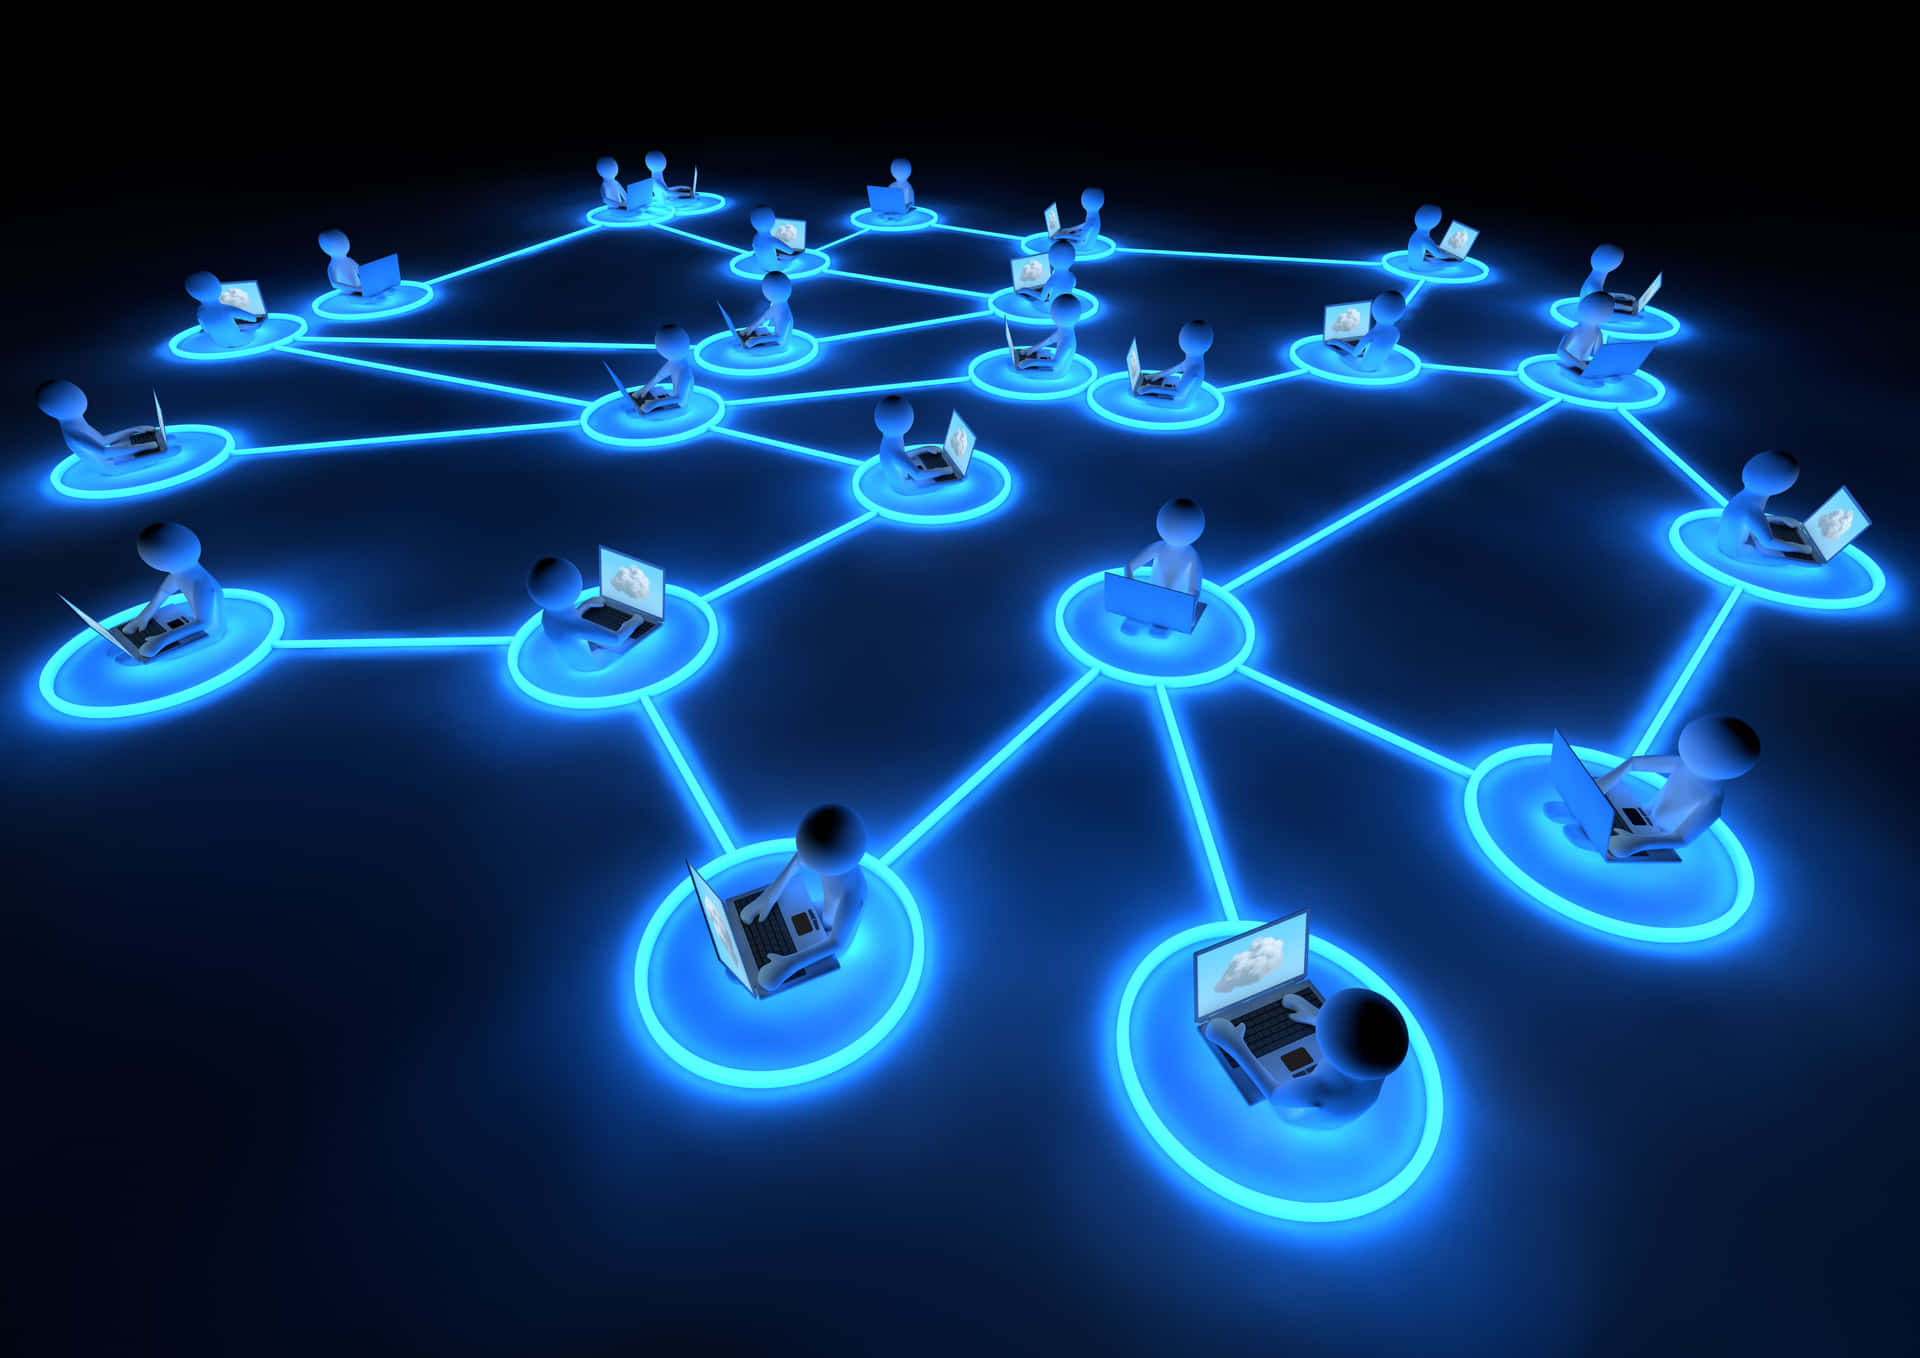 Digital Network Connectivity Concept